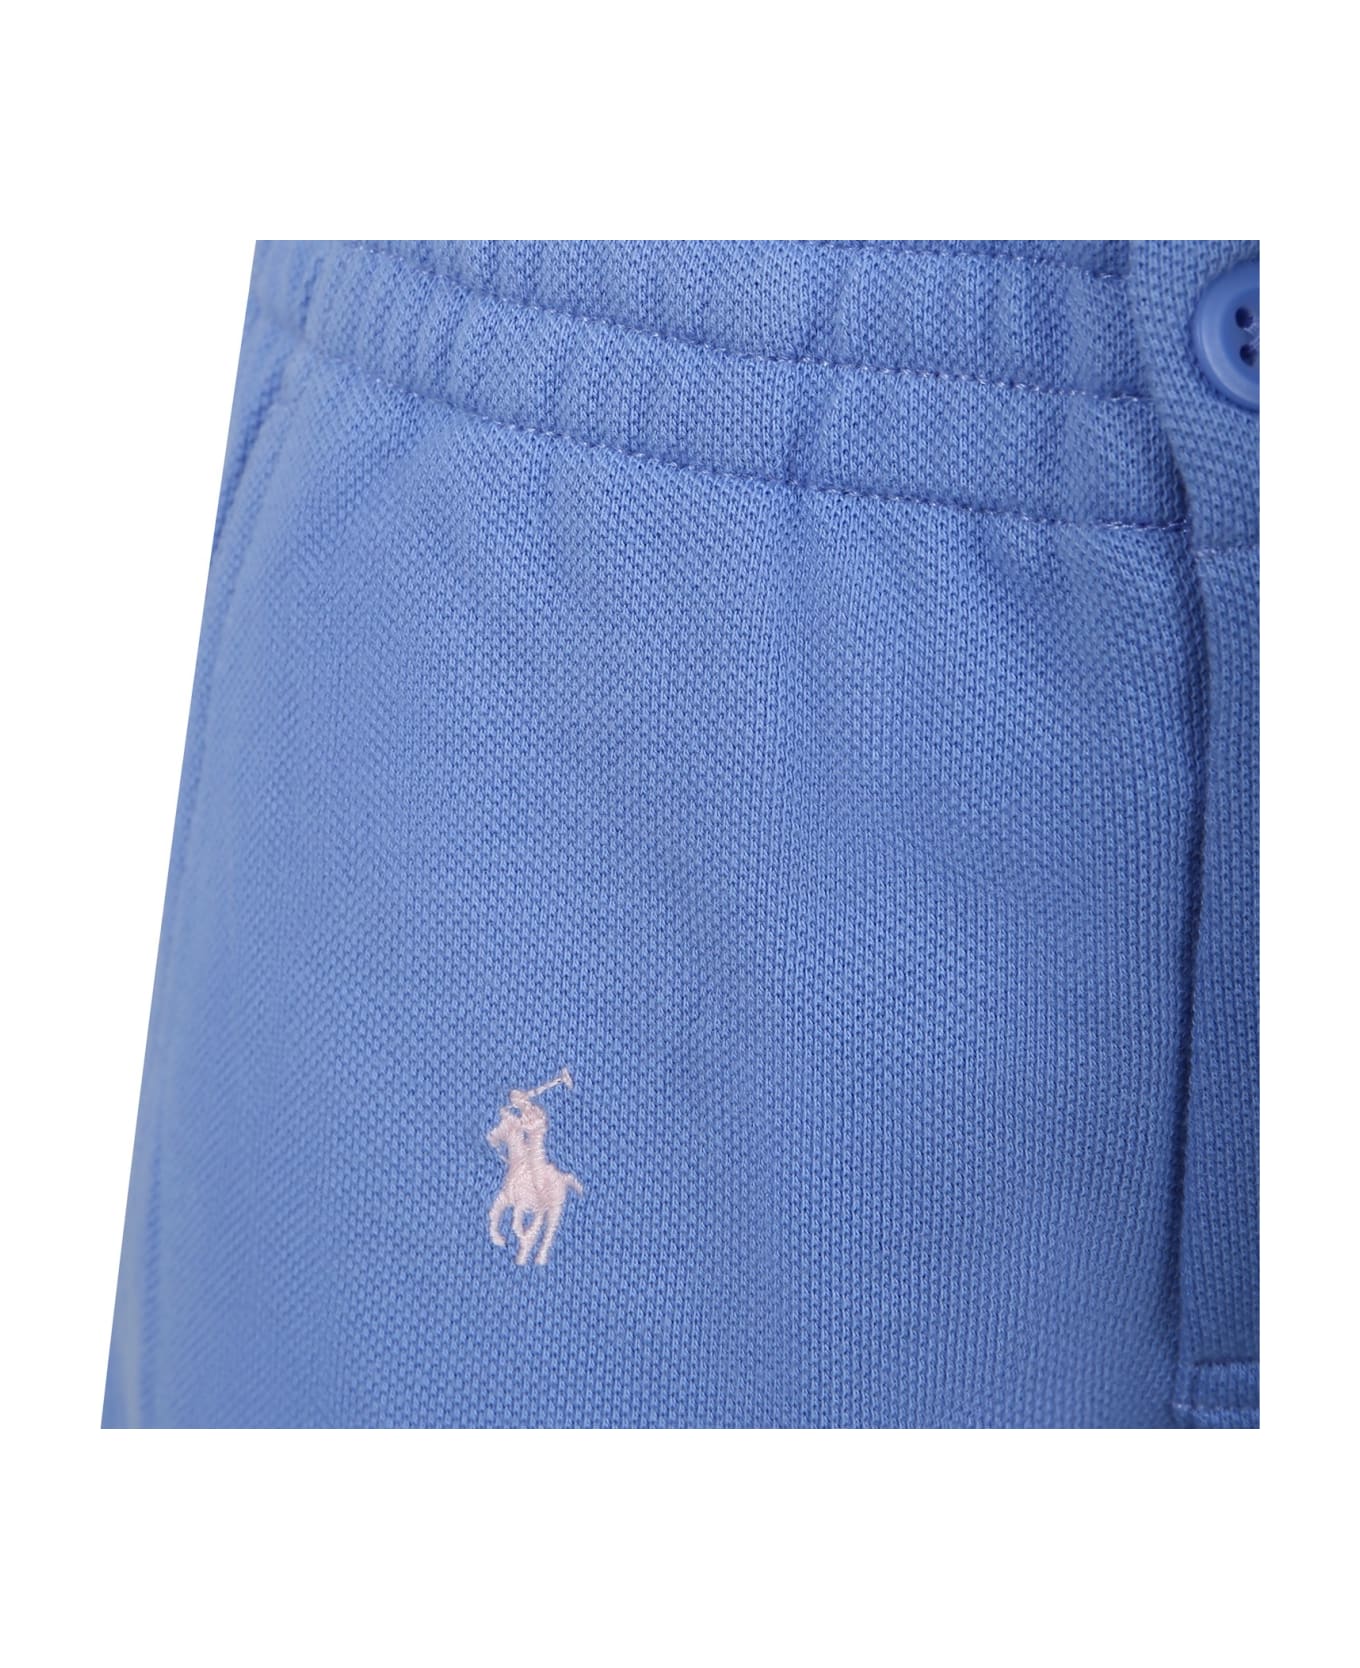 Ralph Lauren Light Blue Shorts For Boy With Horses - Light Blue